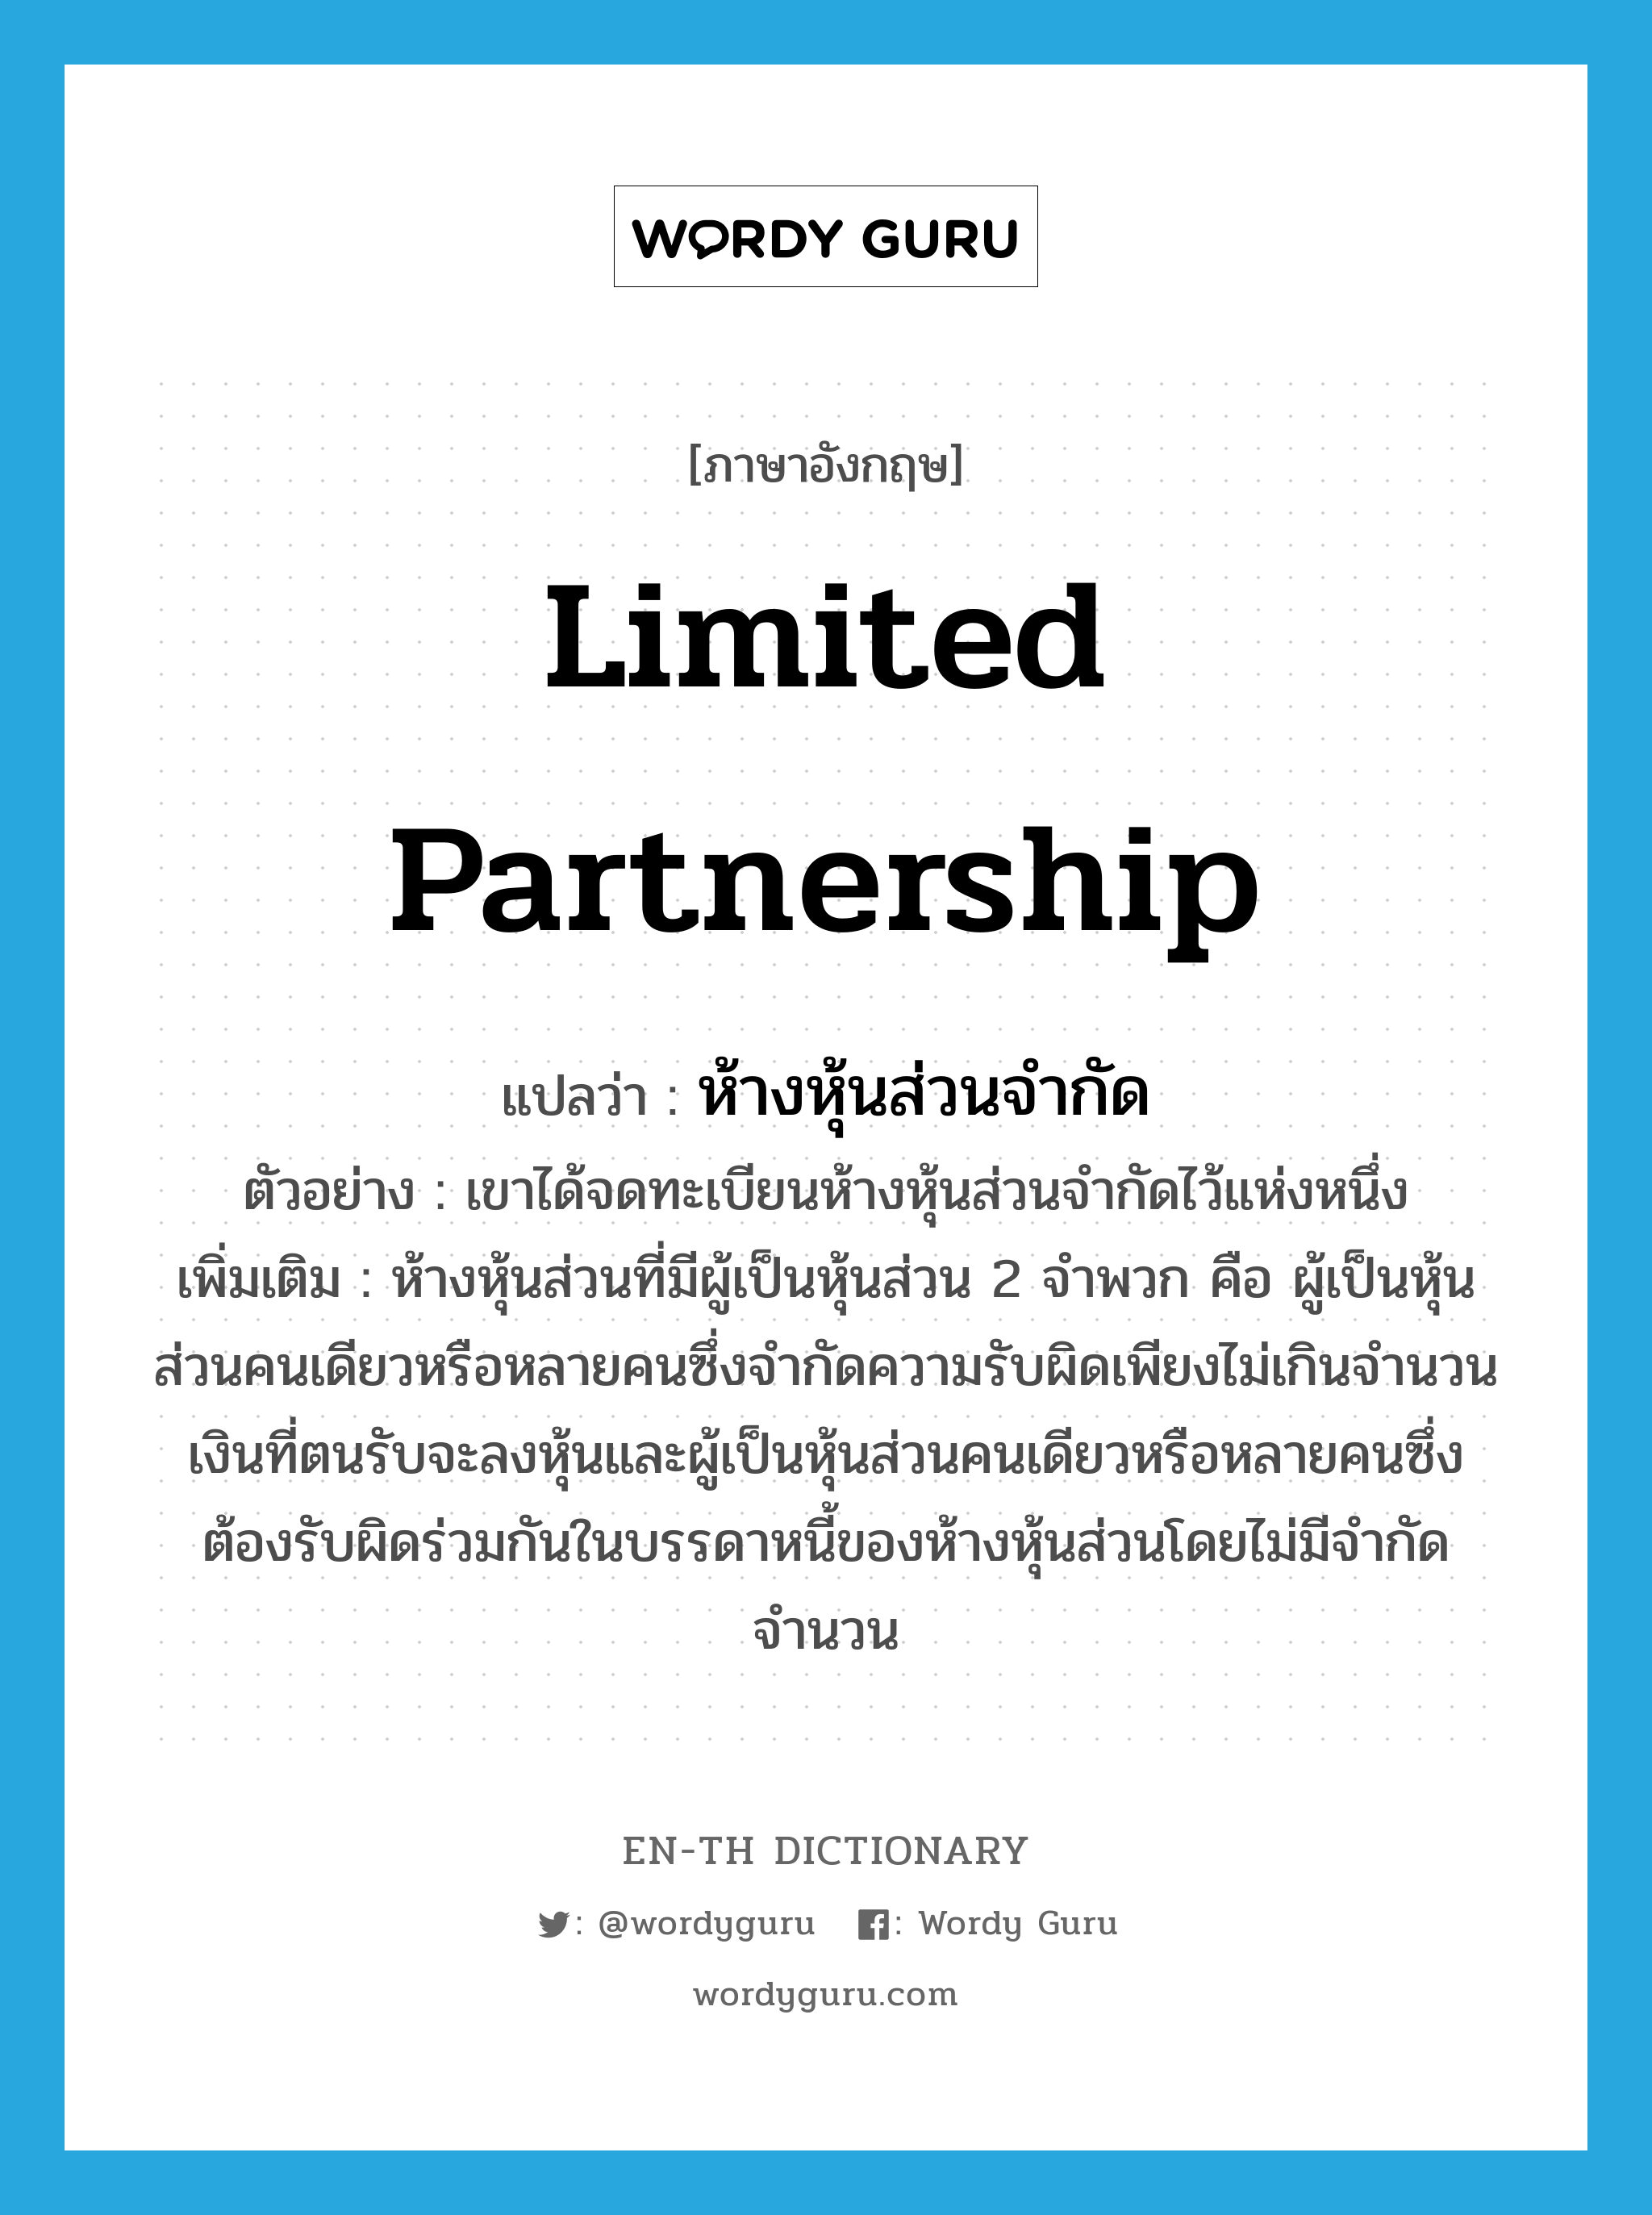 limited partnership แปลว่า?, คำศัพท์ภาษาอังกฤษ limited partnership แปลว่า ห้างหุ้นส่วนจำกัด ประเภท N ตัวอย่าง เขาได้จดทะเบียนห้างหุ้นส่วนจำกัดไว้แห่งหนึ่ง เพิ่มเติม ห้างหุ้นส่วนที่มีผู้เป็นหุ้นส่วน 2 จำพวก คือ ผู้เป็นหุ้นส่วนคนเดียวหรือหลายคนซึ่งจำกัดความรับผิดเพียงไม่เกินจำนวนเงินที่ตนรับจะลงหุ้นและผู้เป็นหุ้นส่วนคนเดียวหรือหลายคนซึ่งต้องรับผิดร่วมกันในบรรดาหนี้ของห้างหุ้นส่วนโดยไม่มีจำกัดจำนวน หมวด N